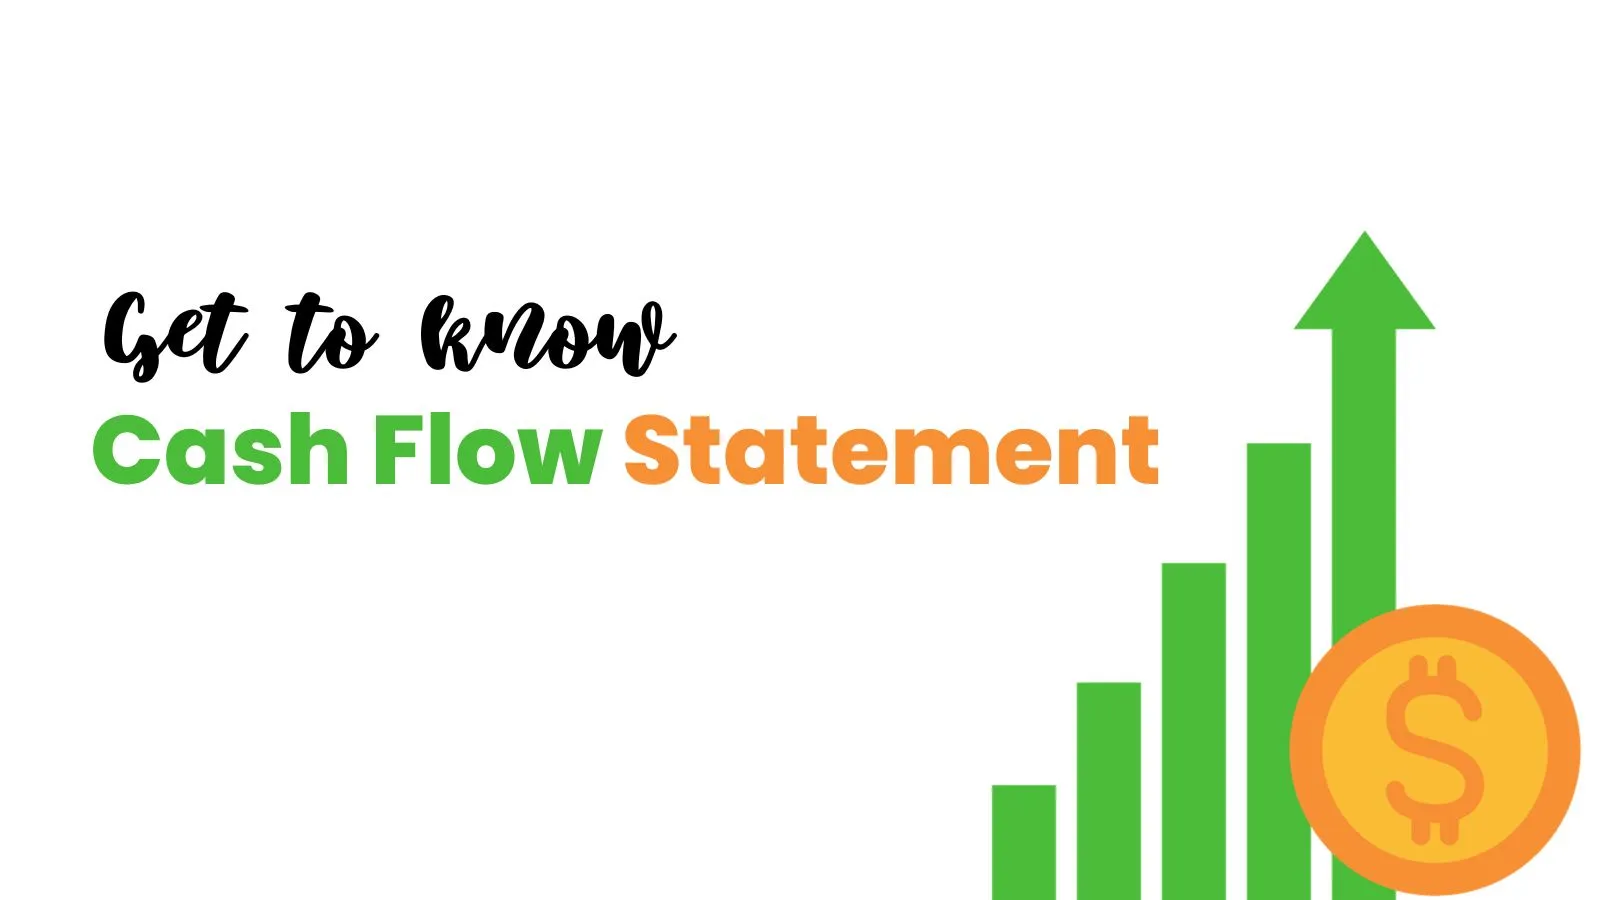 Understanding the cash flow statement